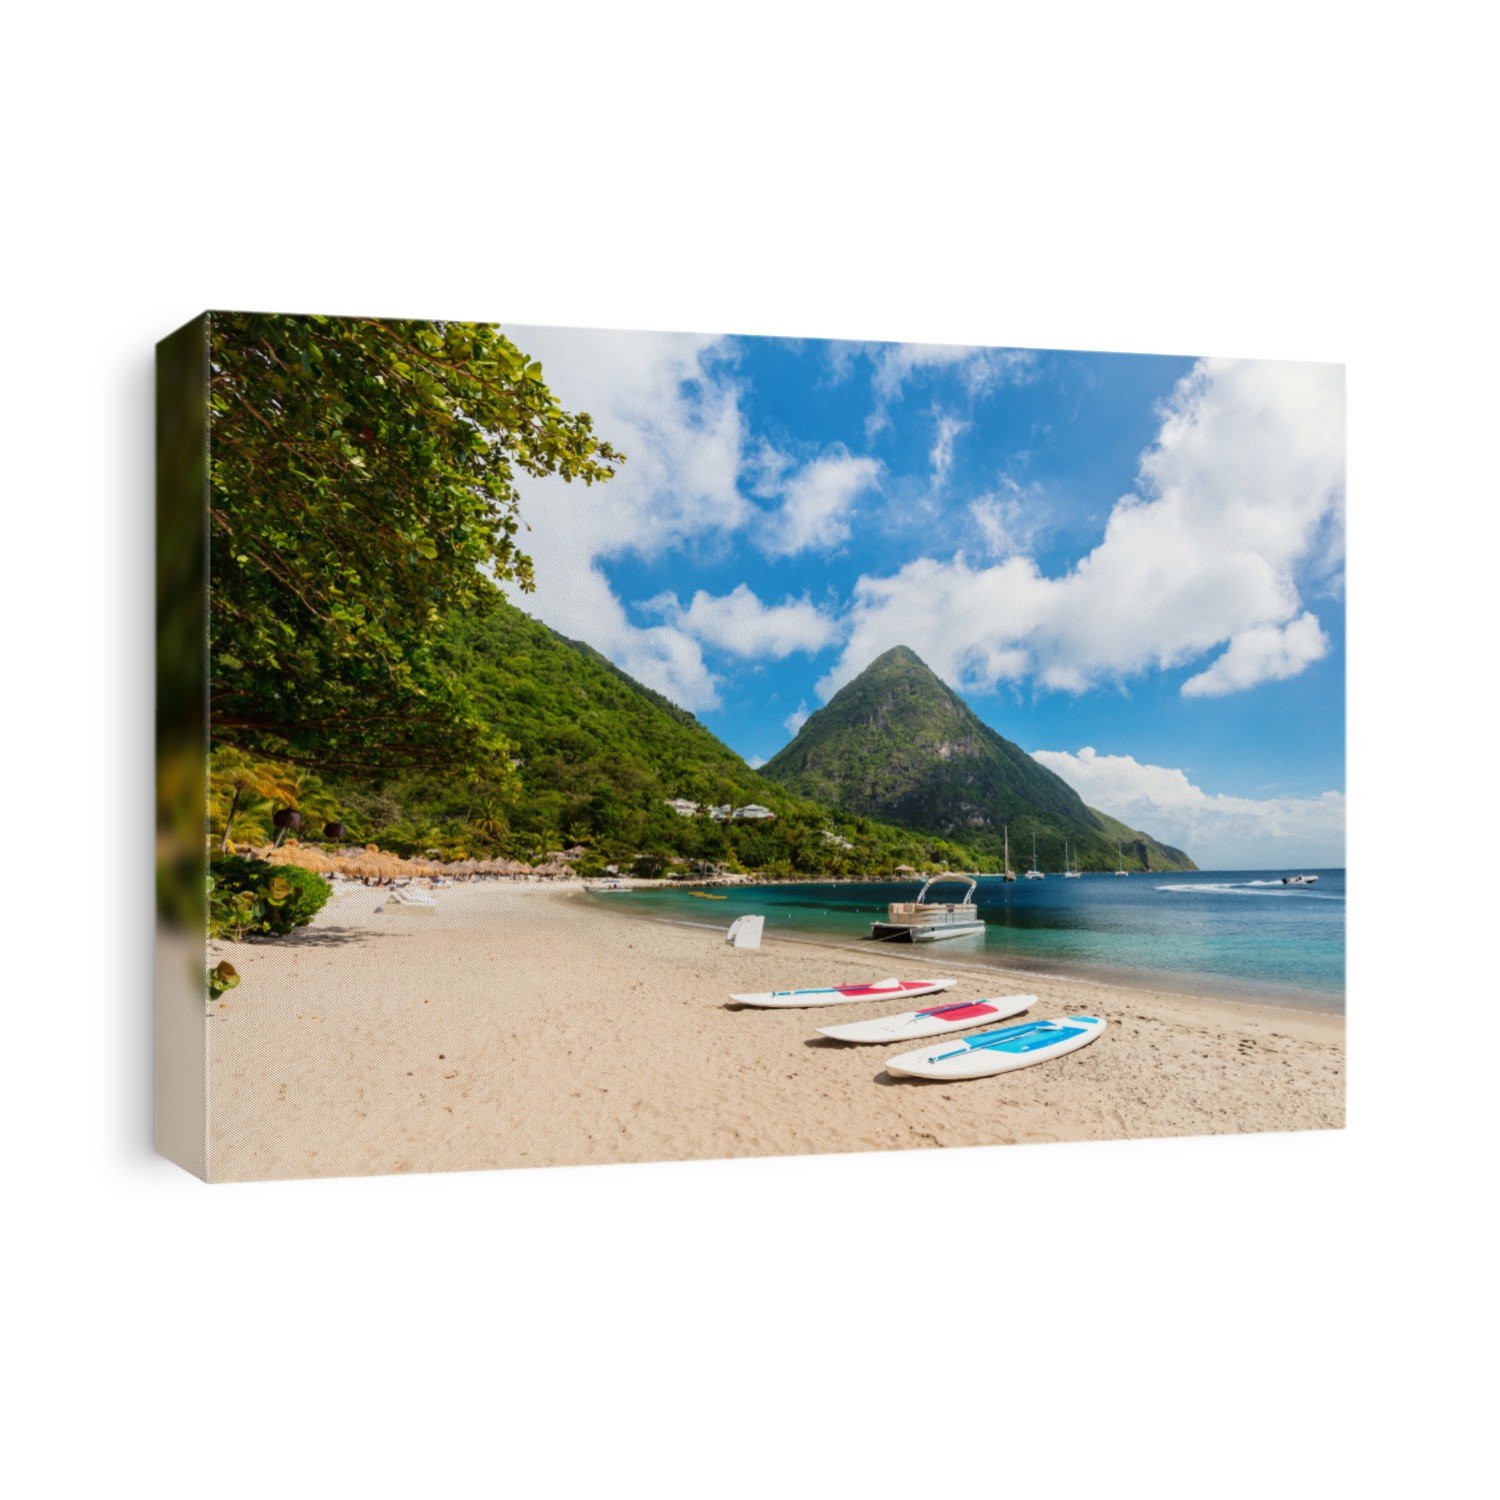 Idyllic white sand tropical beach with view to Piton mountains in Saint Lucia Caribbean